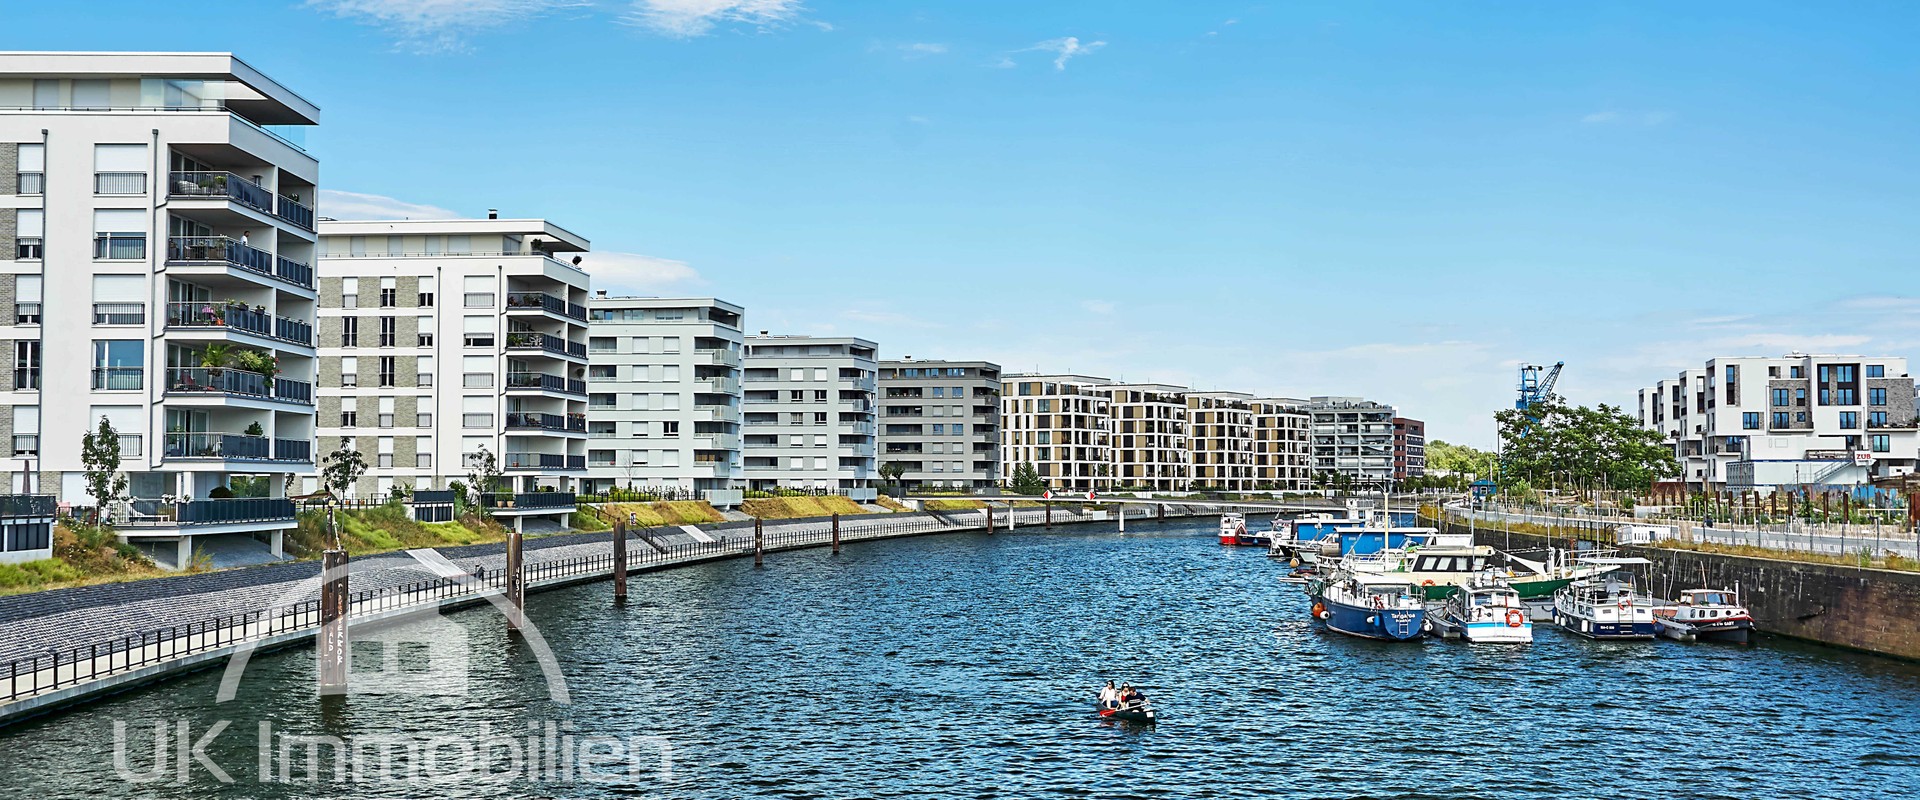 Immobilienmakler-Offenbach-Hafeninsel-Mainufer-Hafentreppe.jpg